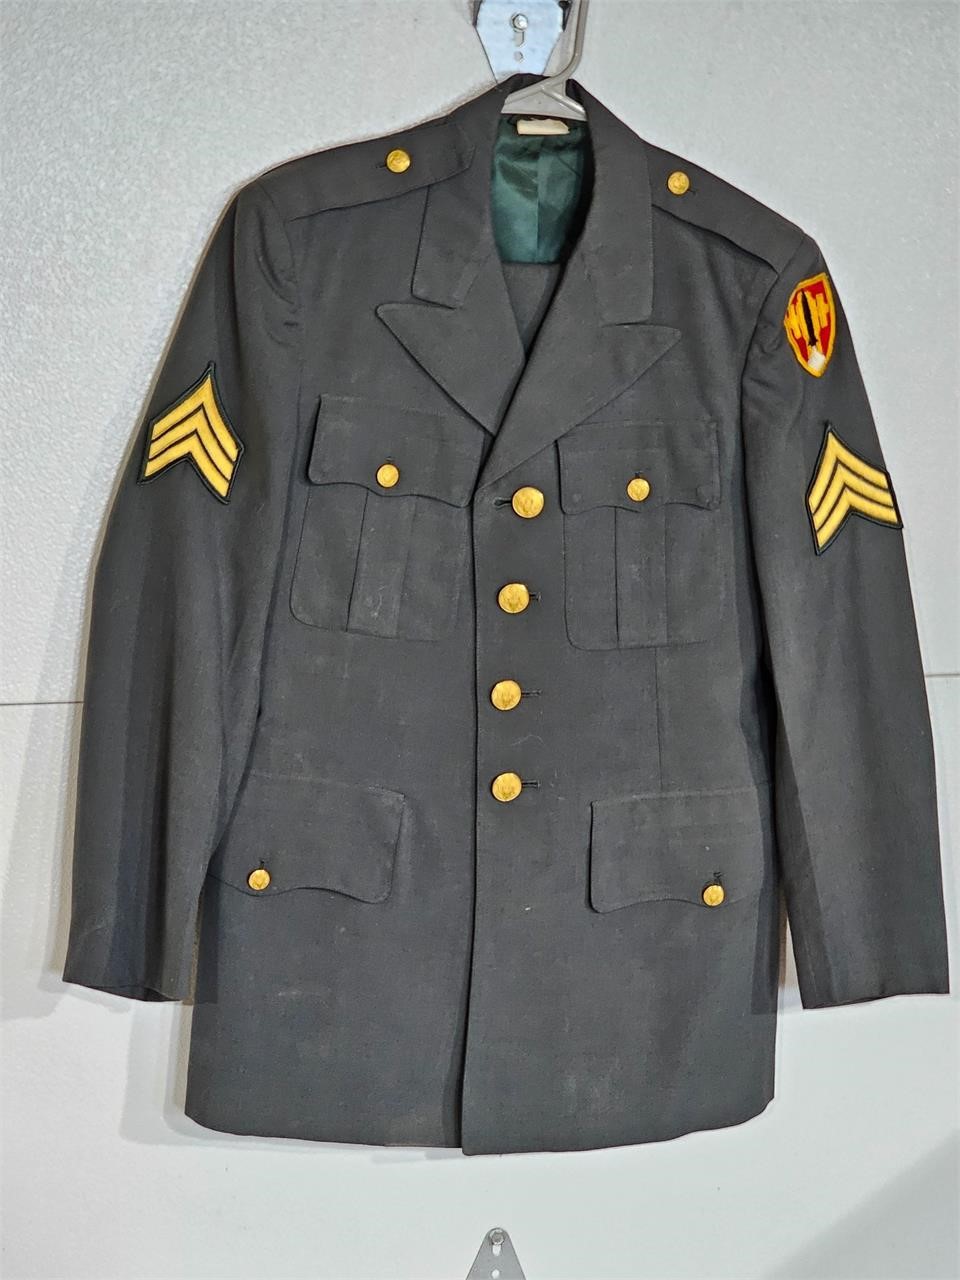 Military Army uniform & Jacket